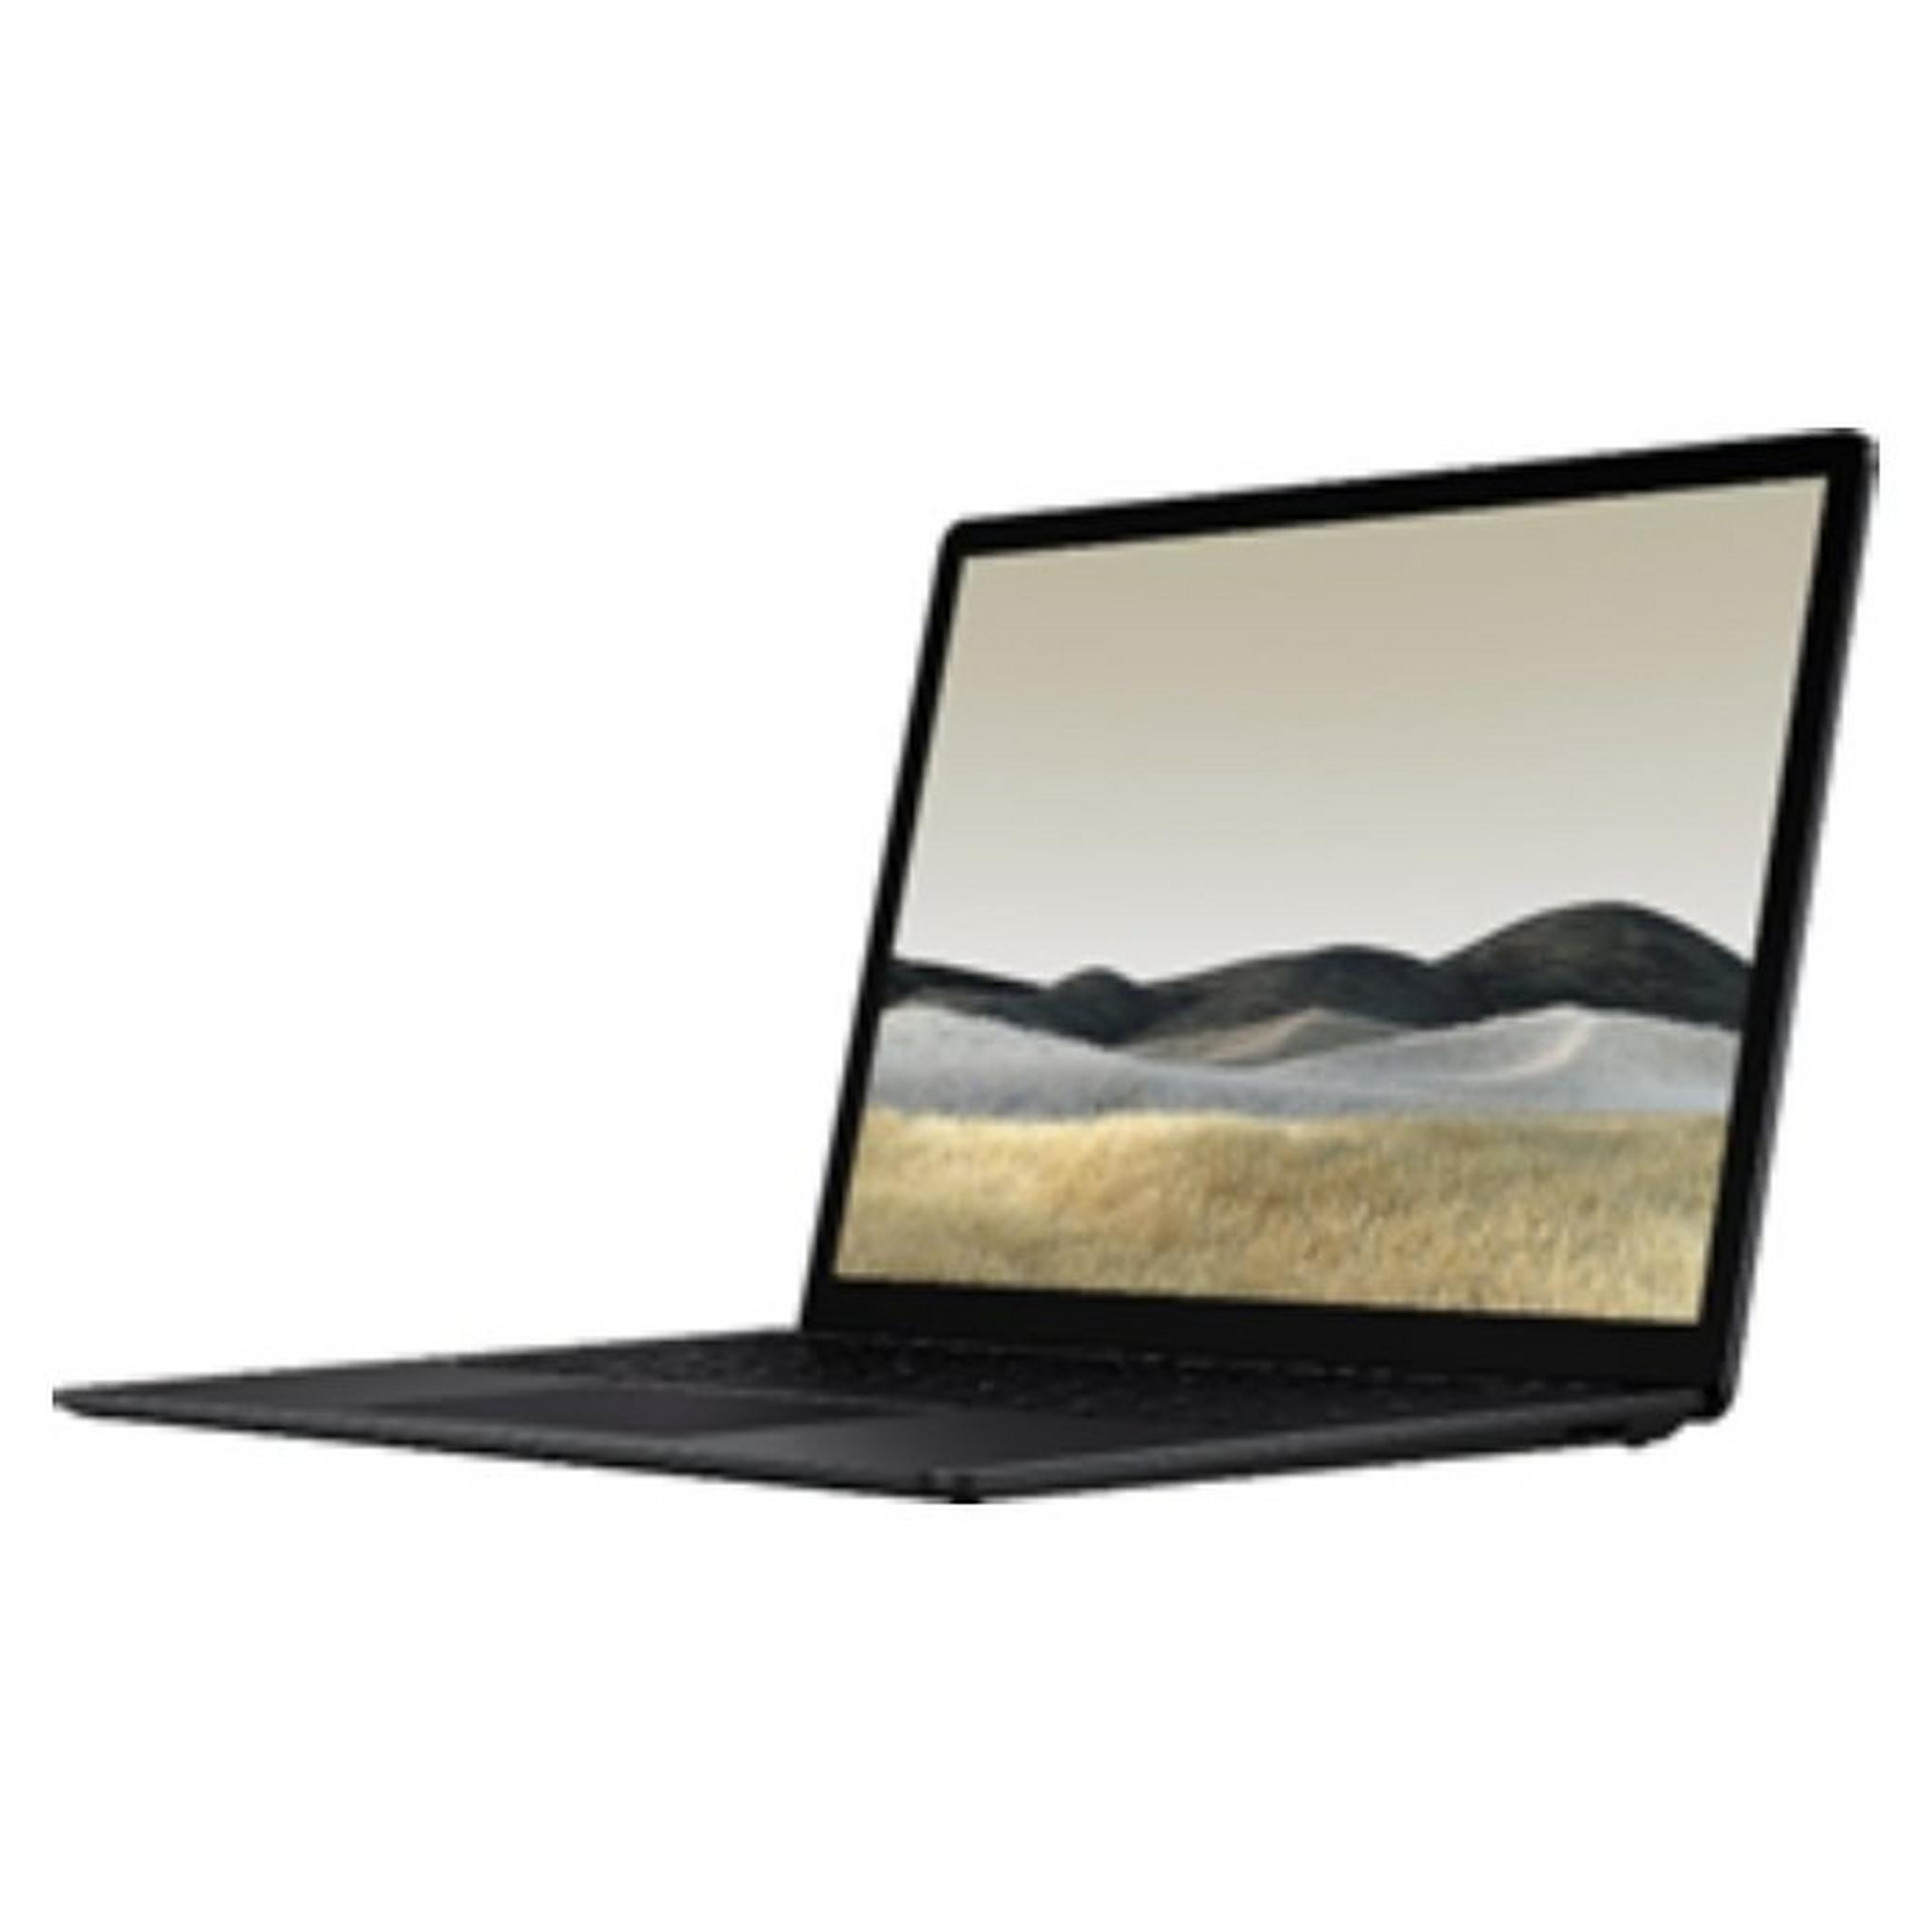 Microsoft Surface 4, Intel Core i7, 16GB RAM, 512GB SSD, 15-inch Laptop - Black